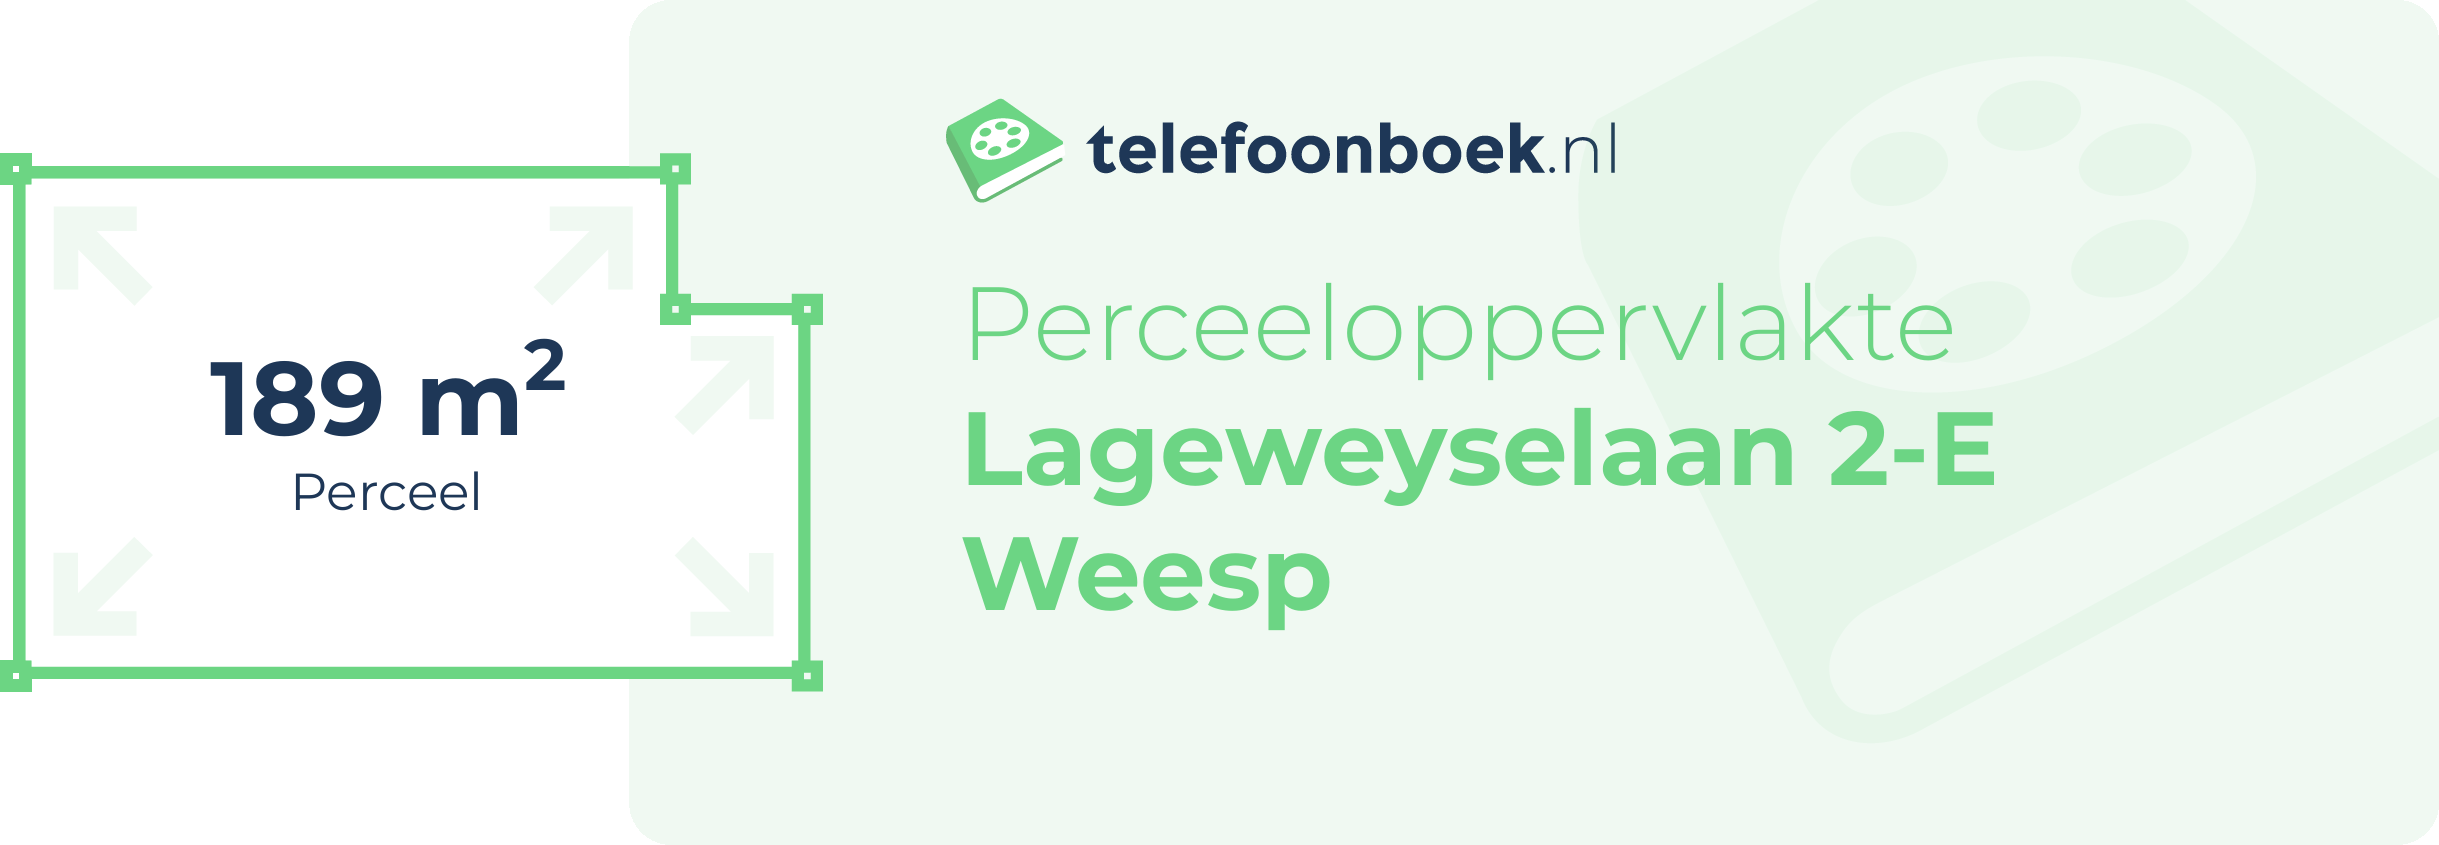 Perceeloppervlakte Lageweyselaan 2-E Weesp